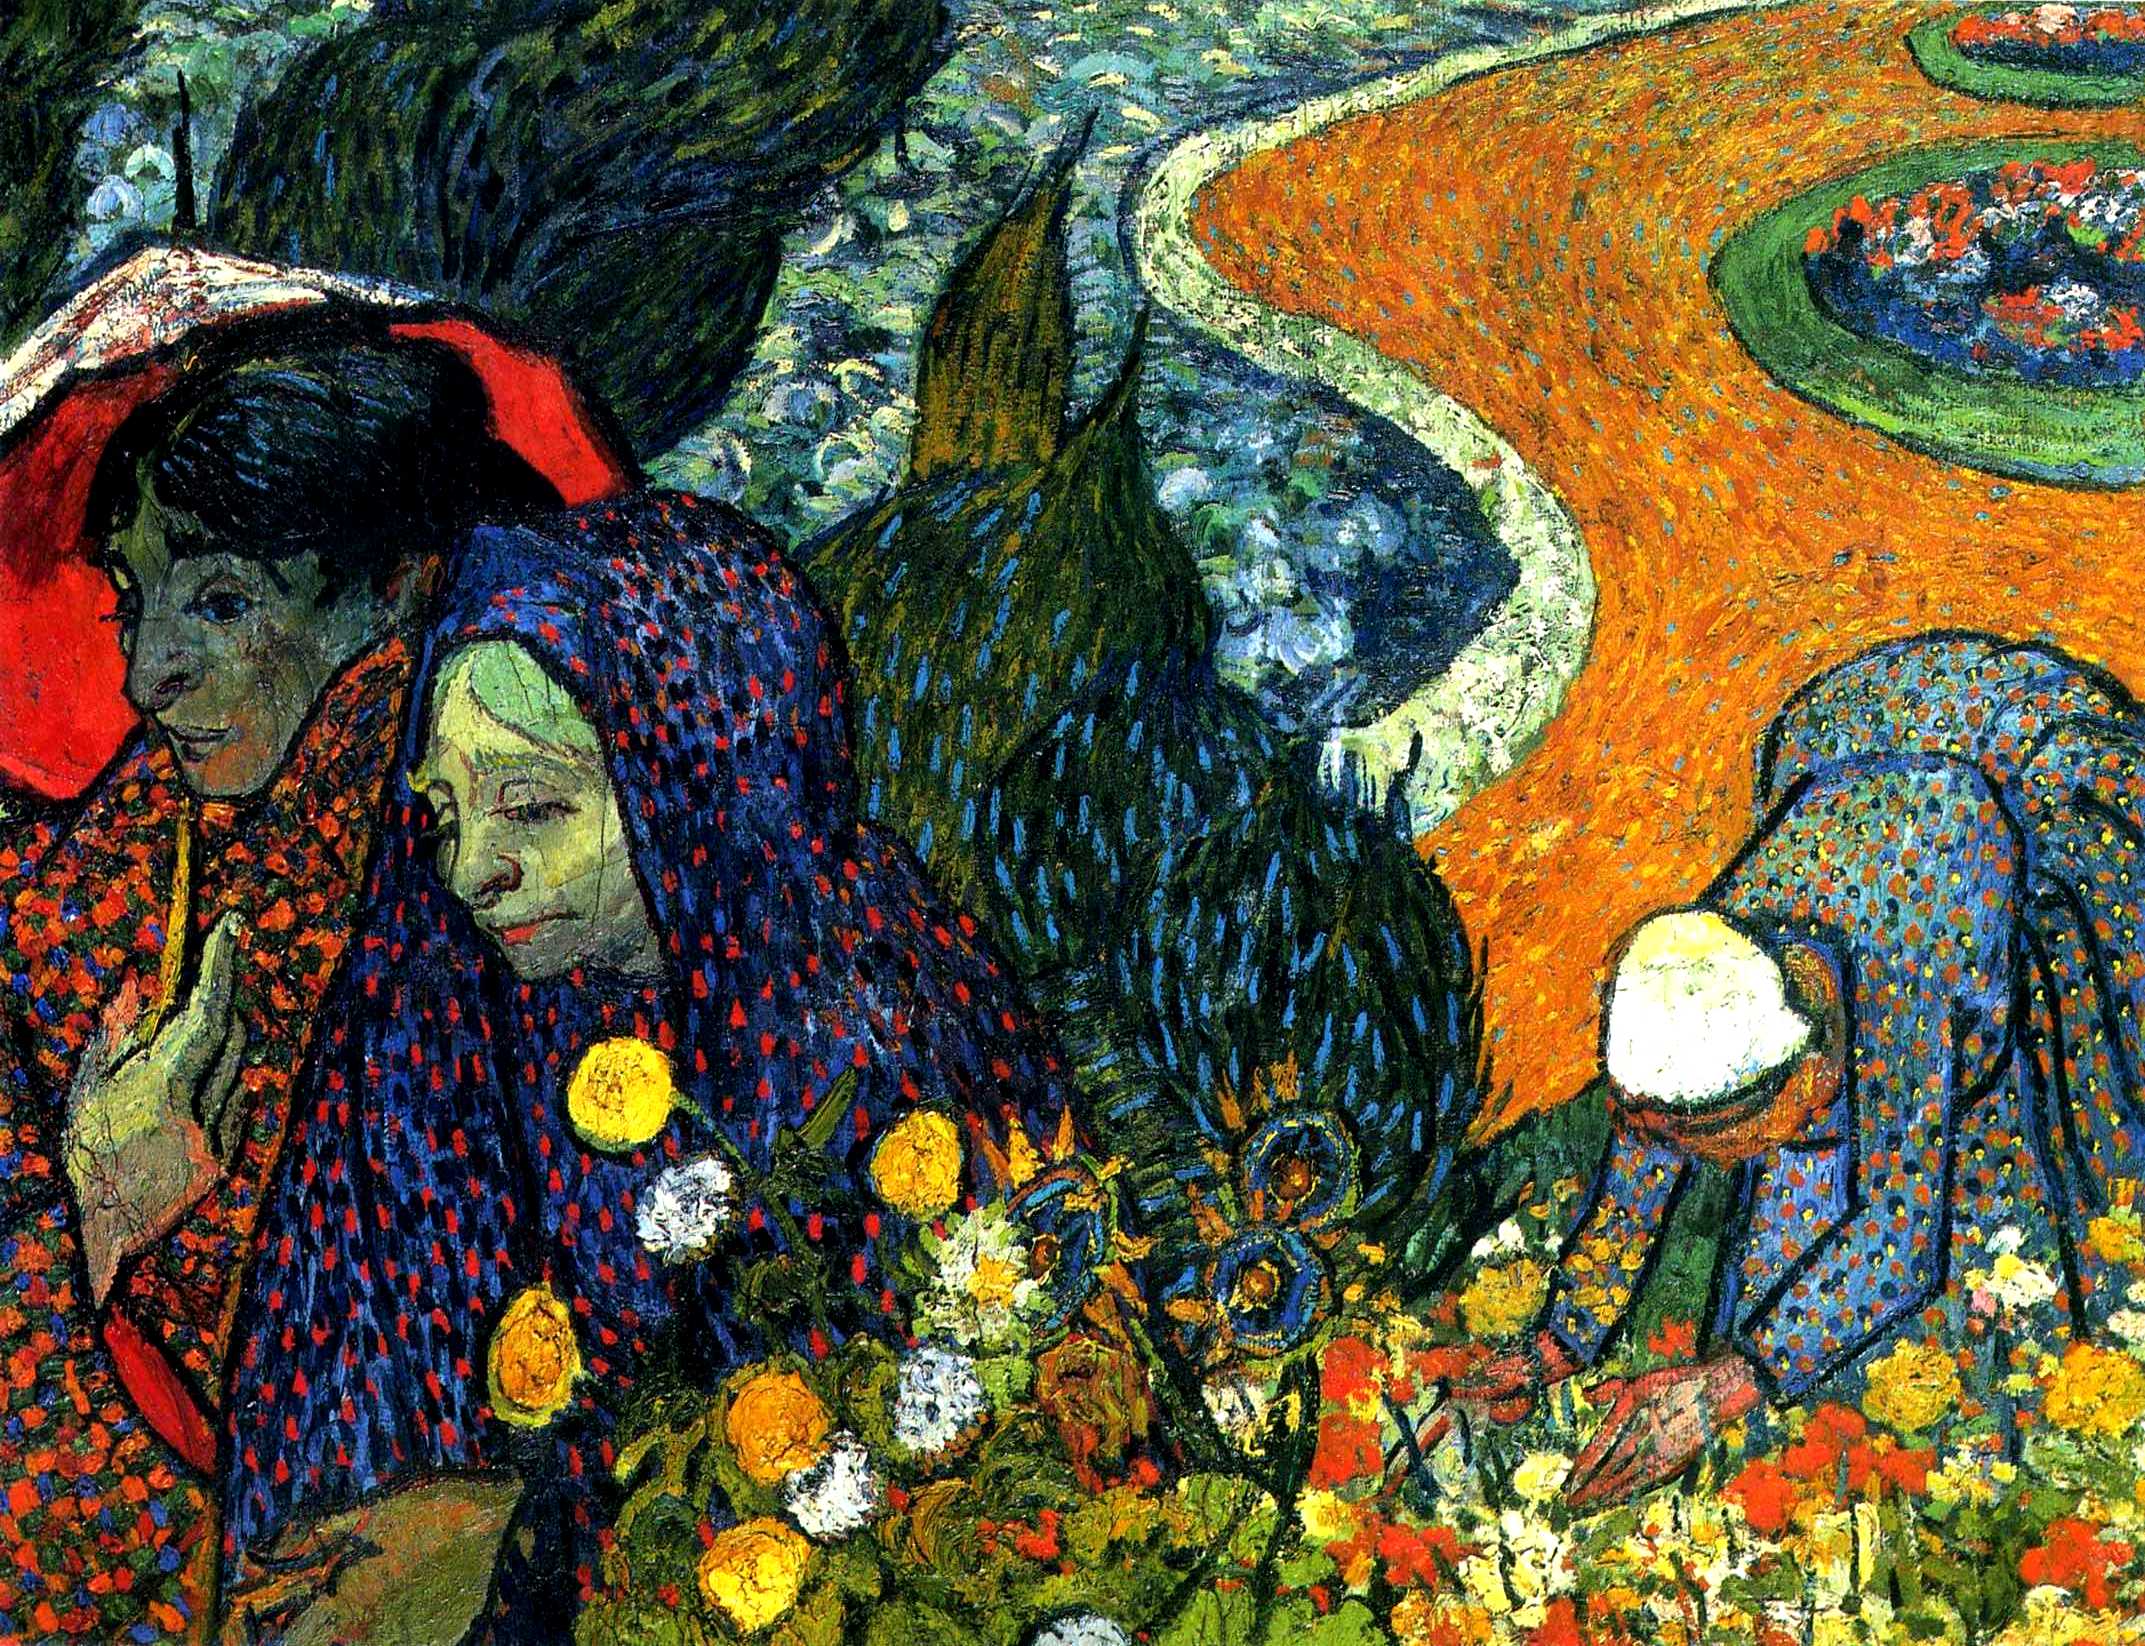 Ladies of Arles (Memory of the Garden at Etten) by Vincent van Gogh - 1888 - 92.5 x 73.5 cm Hermitage Museum